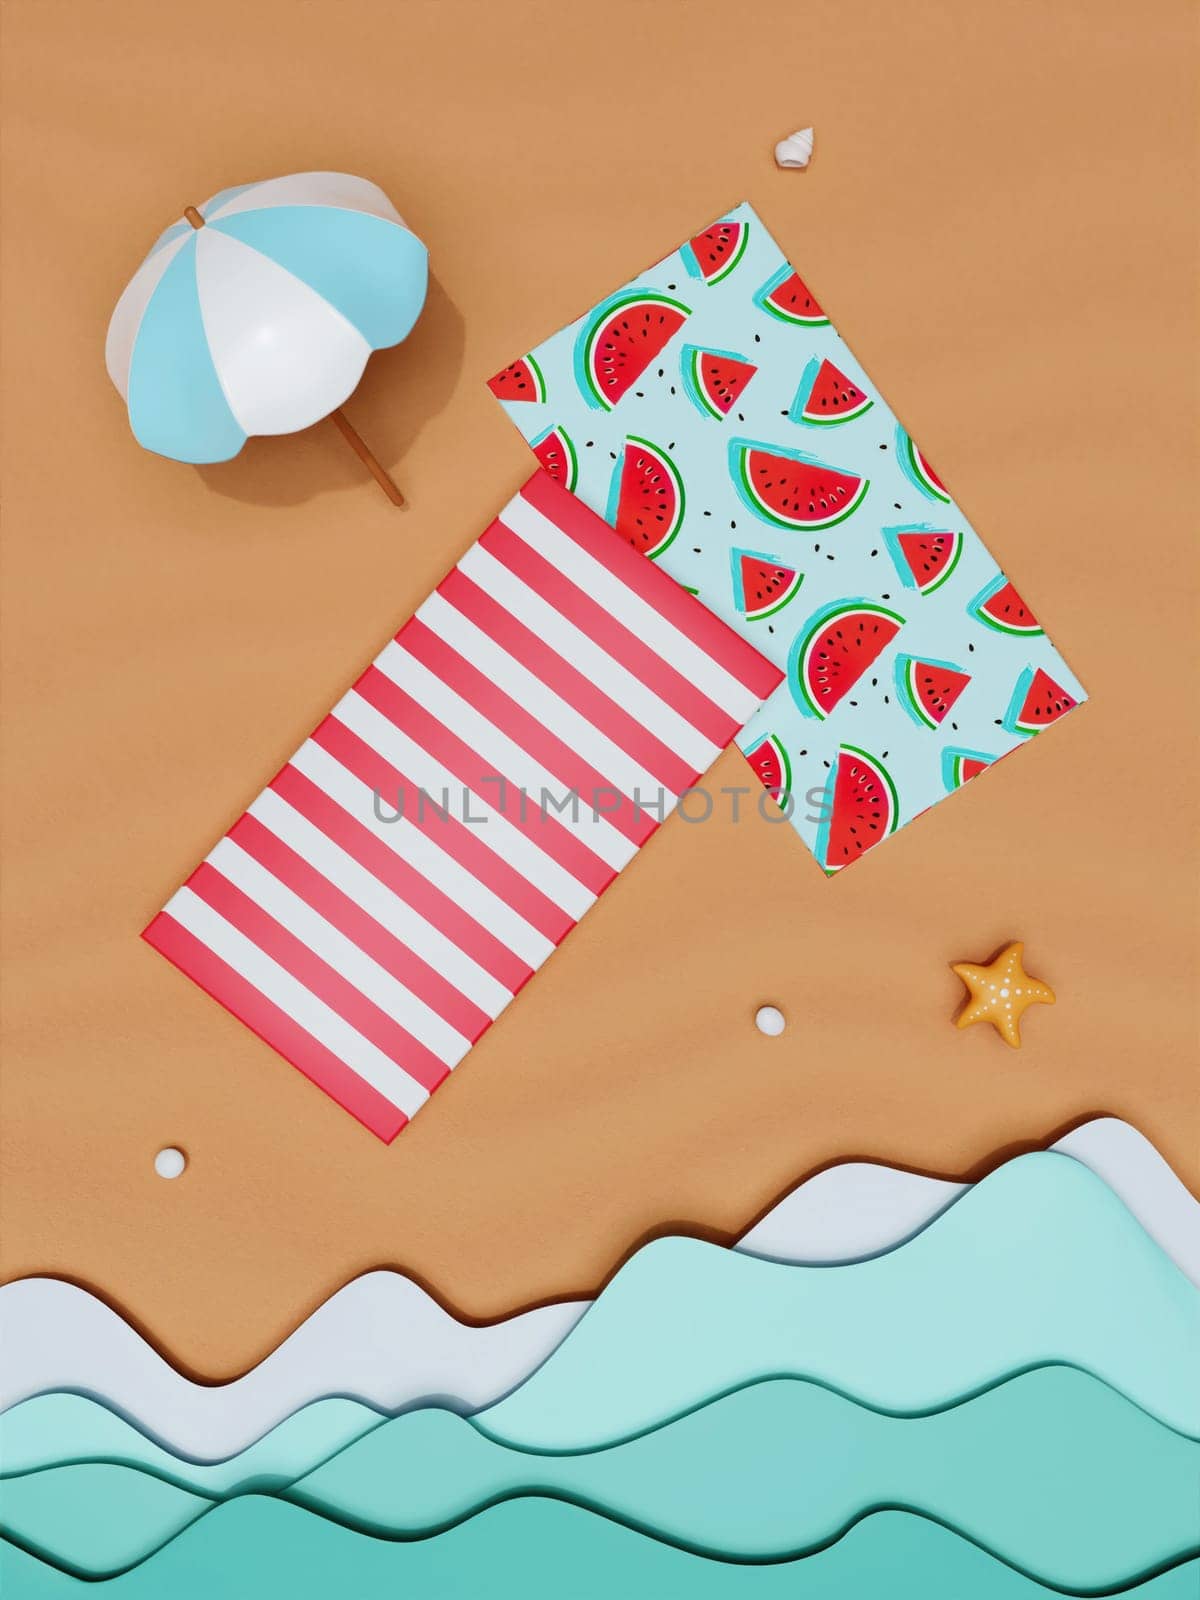 Flat lay summer vacation with beach towel, umbrella. summer vacation concept. illustration banner 3d rendering illustration.